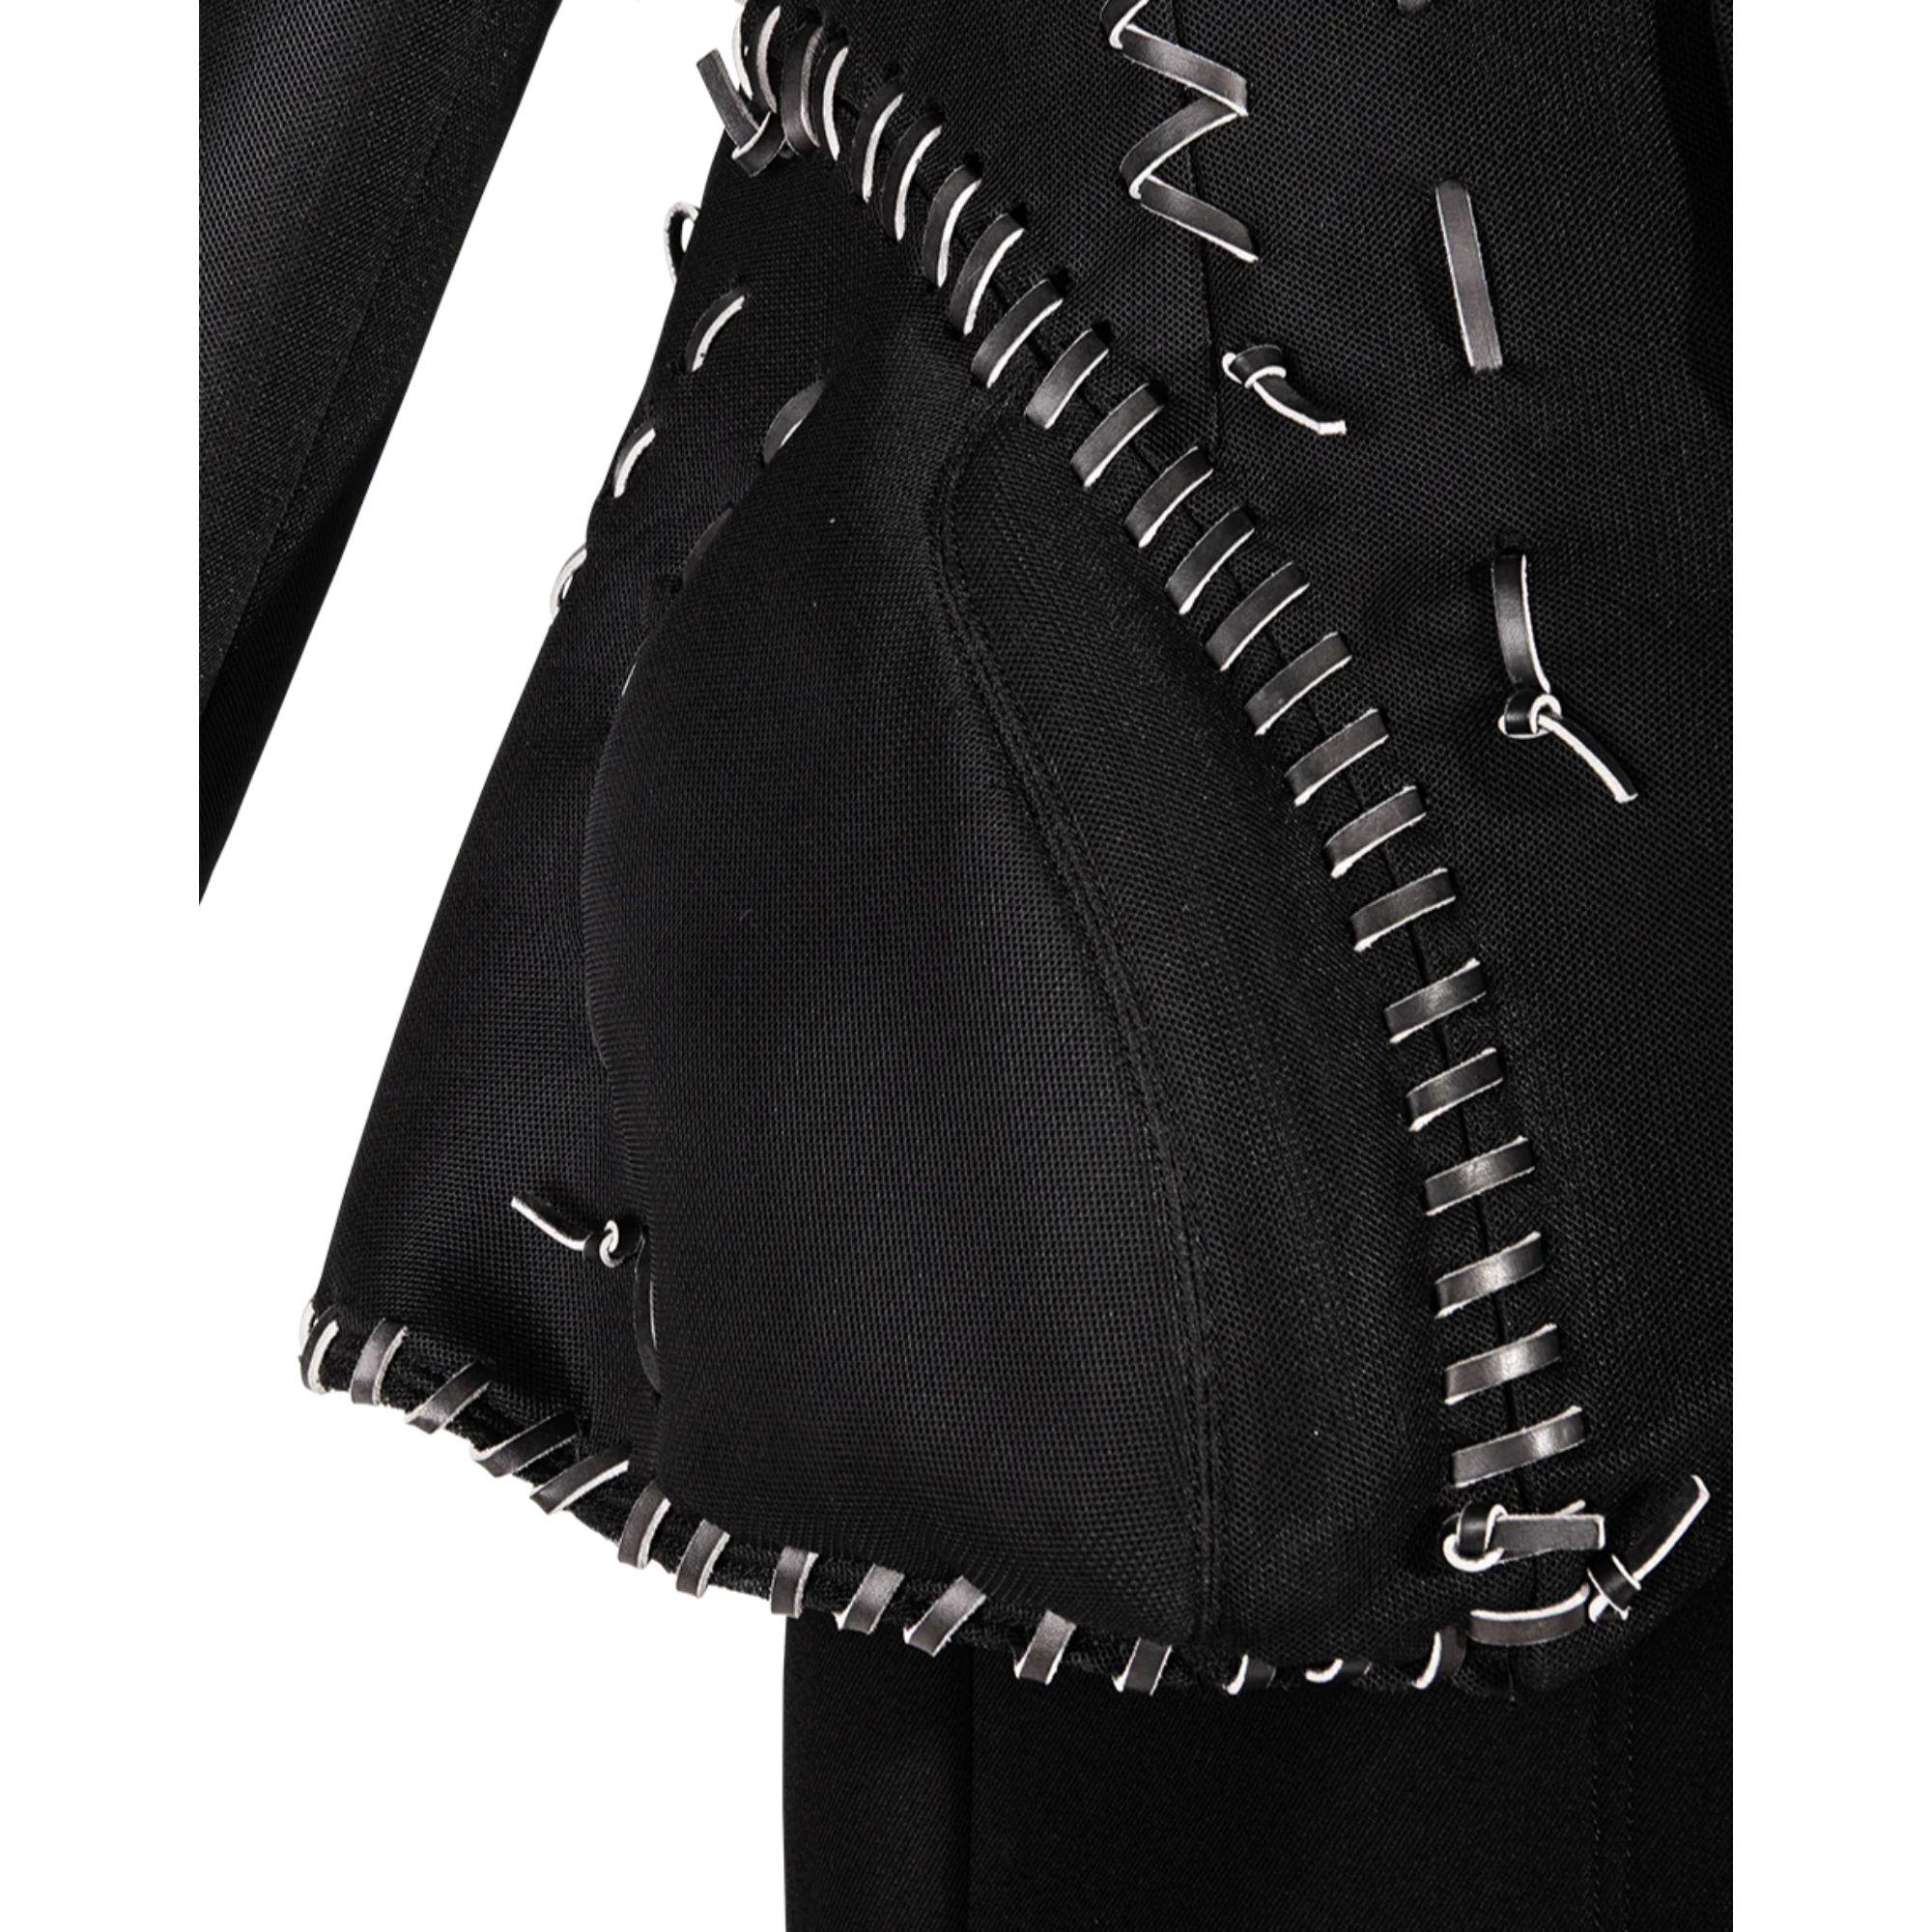 S/S 2005 Comme des Garcons Saddle Stitched Skirt Set For Sale 1